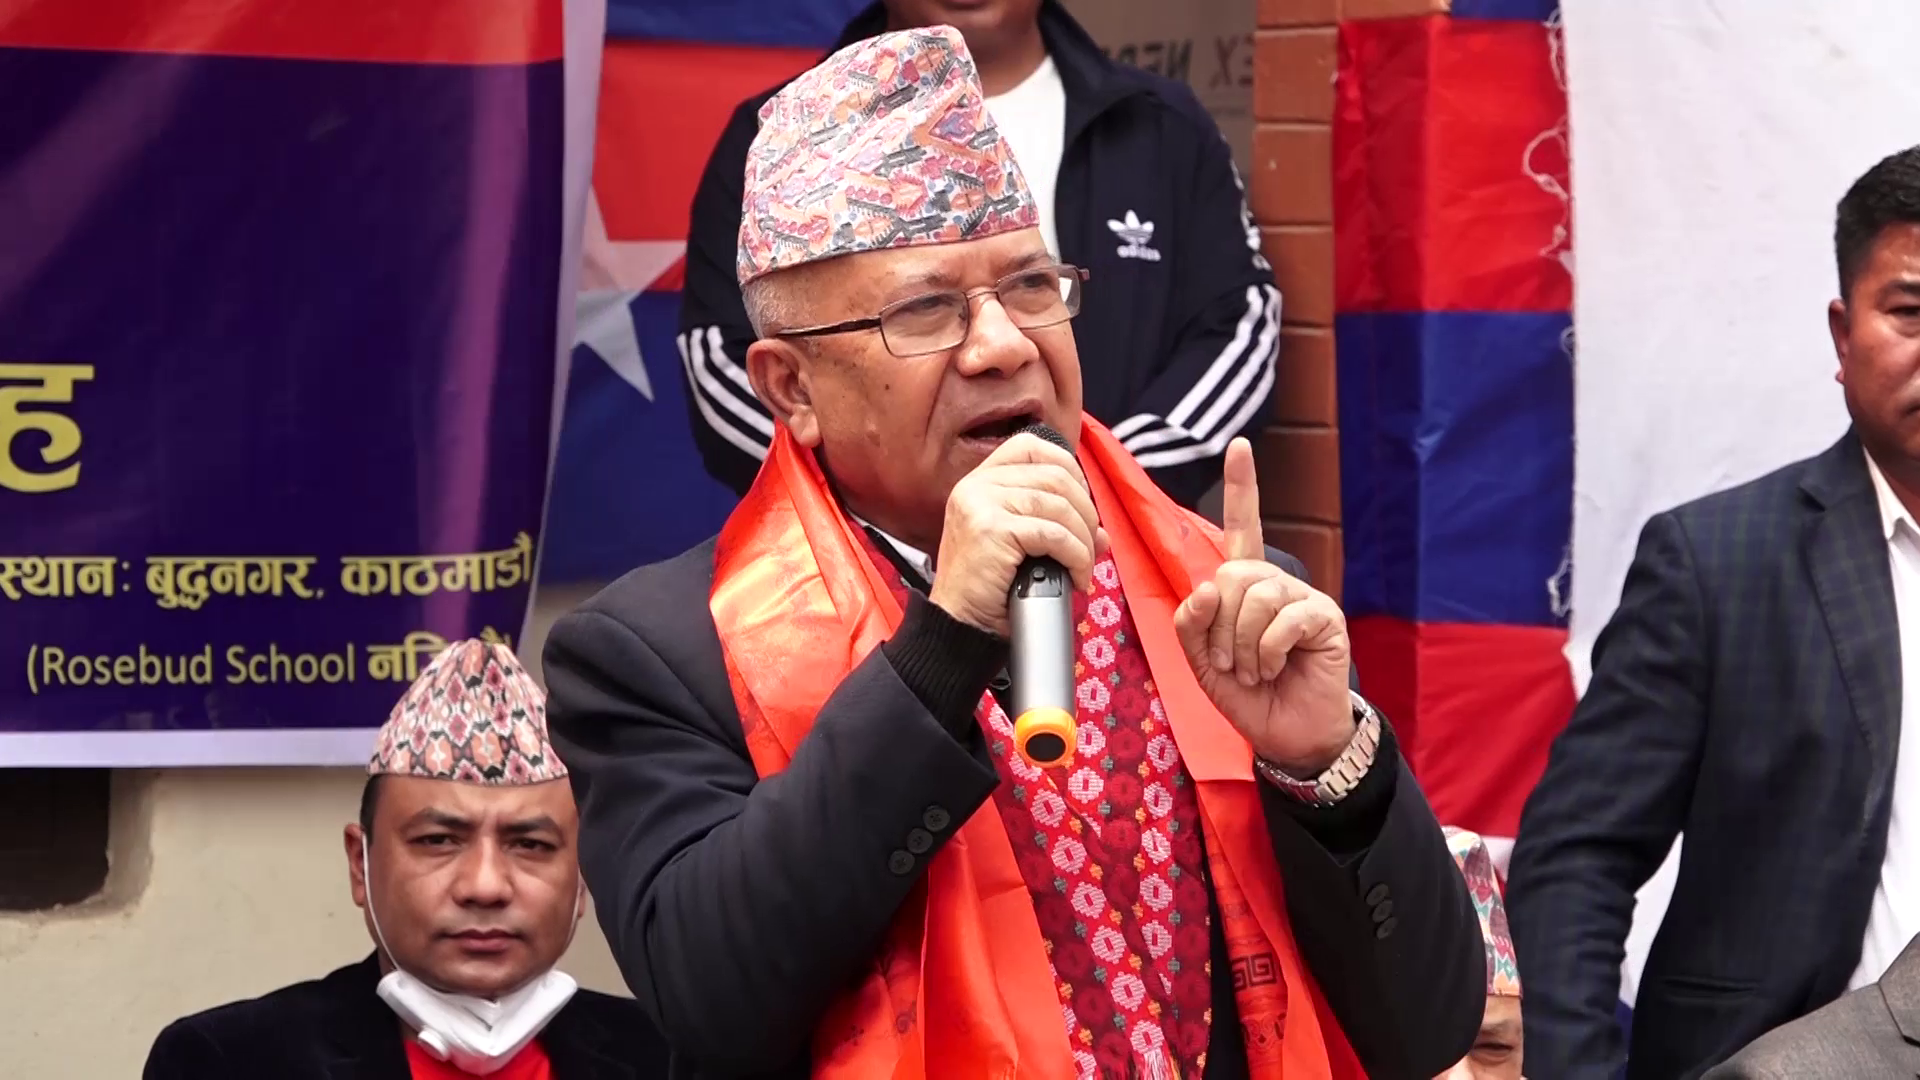 देशव्यापी संगठन बनाउने अभियानमा छौं, चुनाव भए ओलीलाई एक्ल्याउँछौंः नेपाल